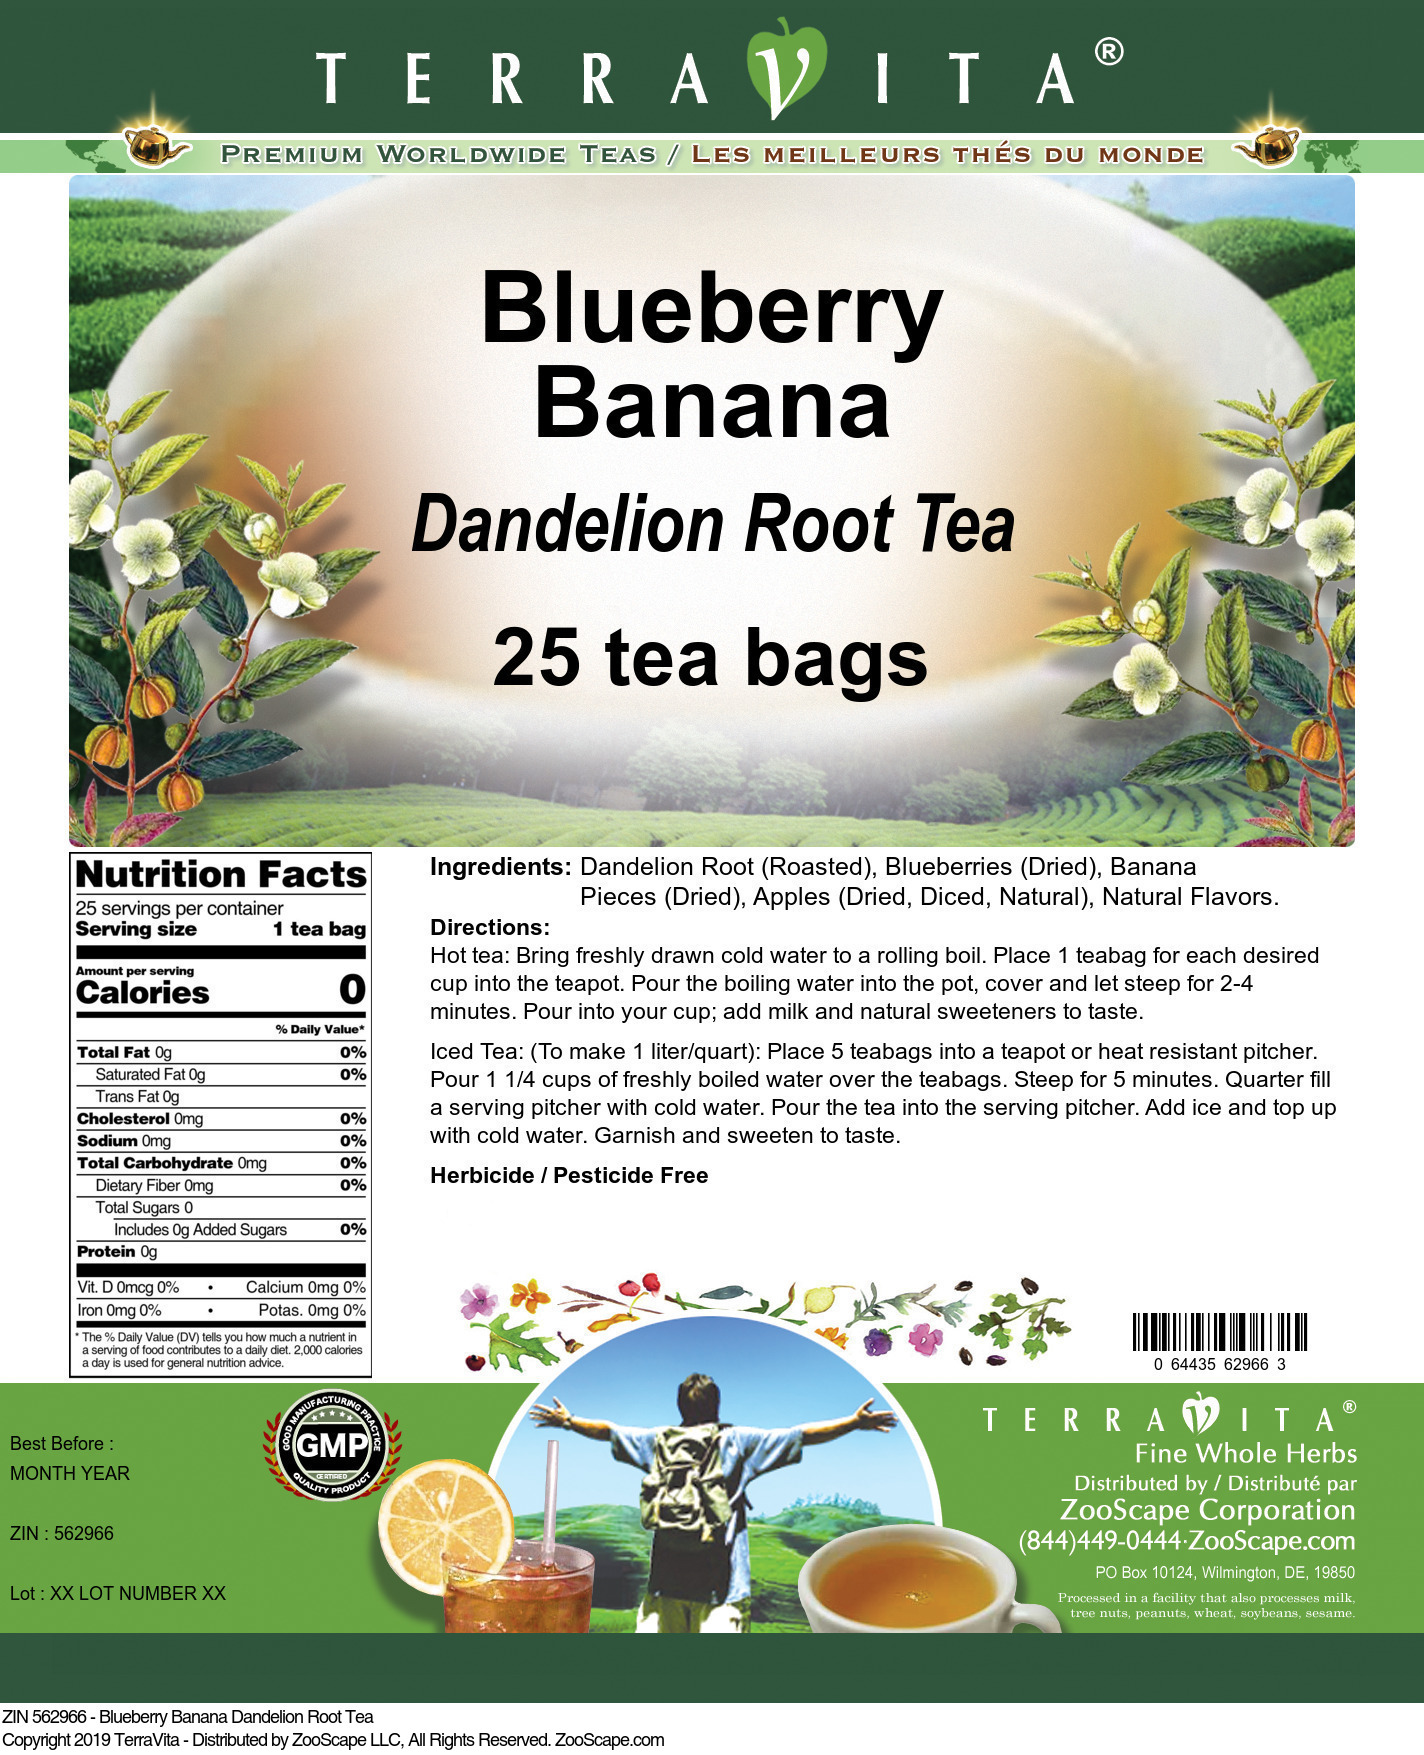 Blueberry Banana Dandelion Root Tea - Label